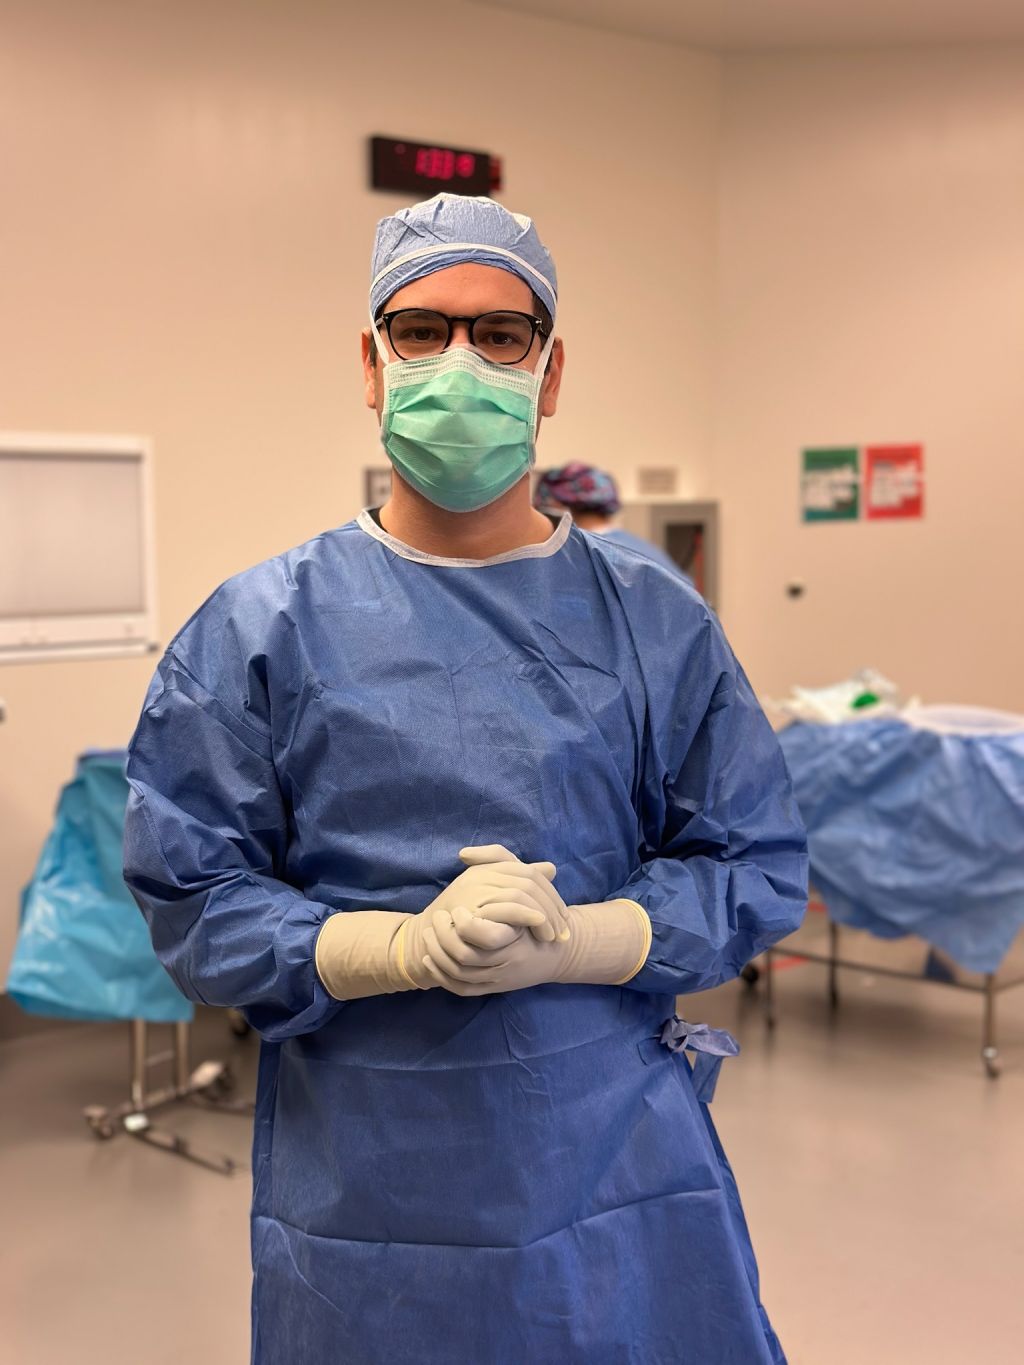 Dr. Solomon Azouz | Top Gynecomastia Surgeon in Dallas, Texas